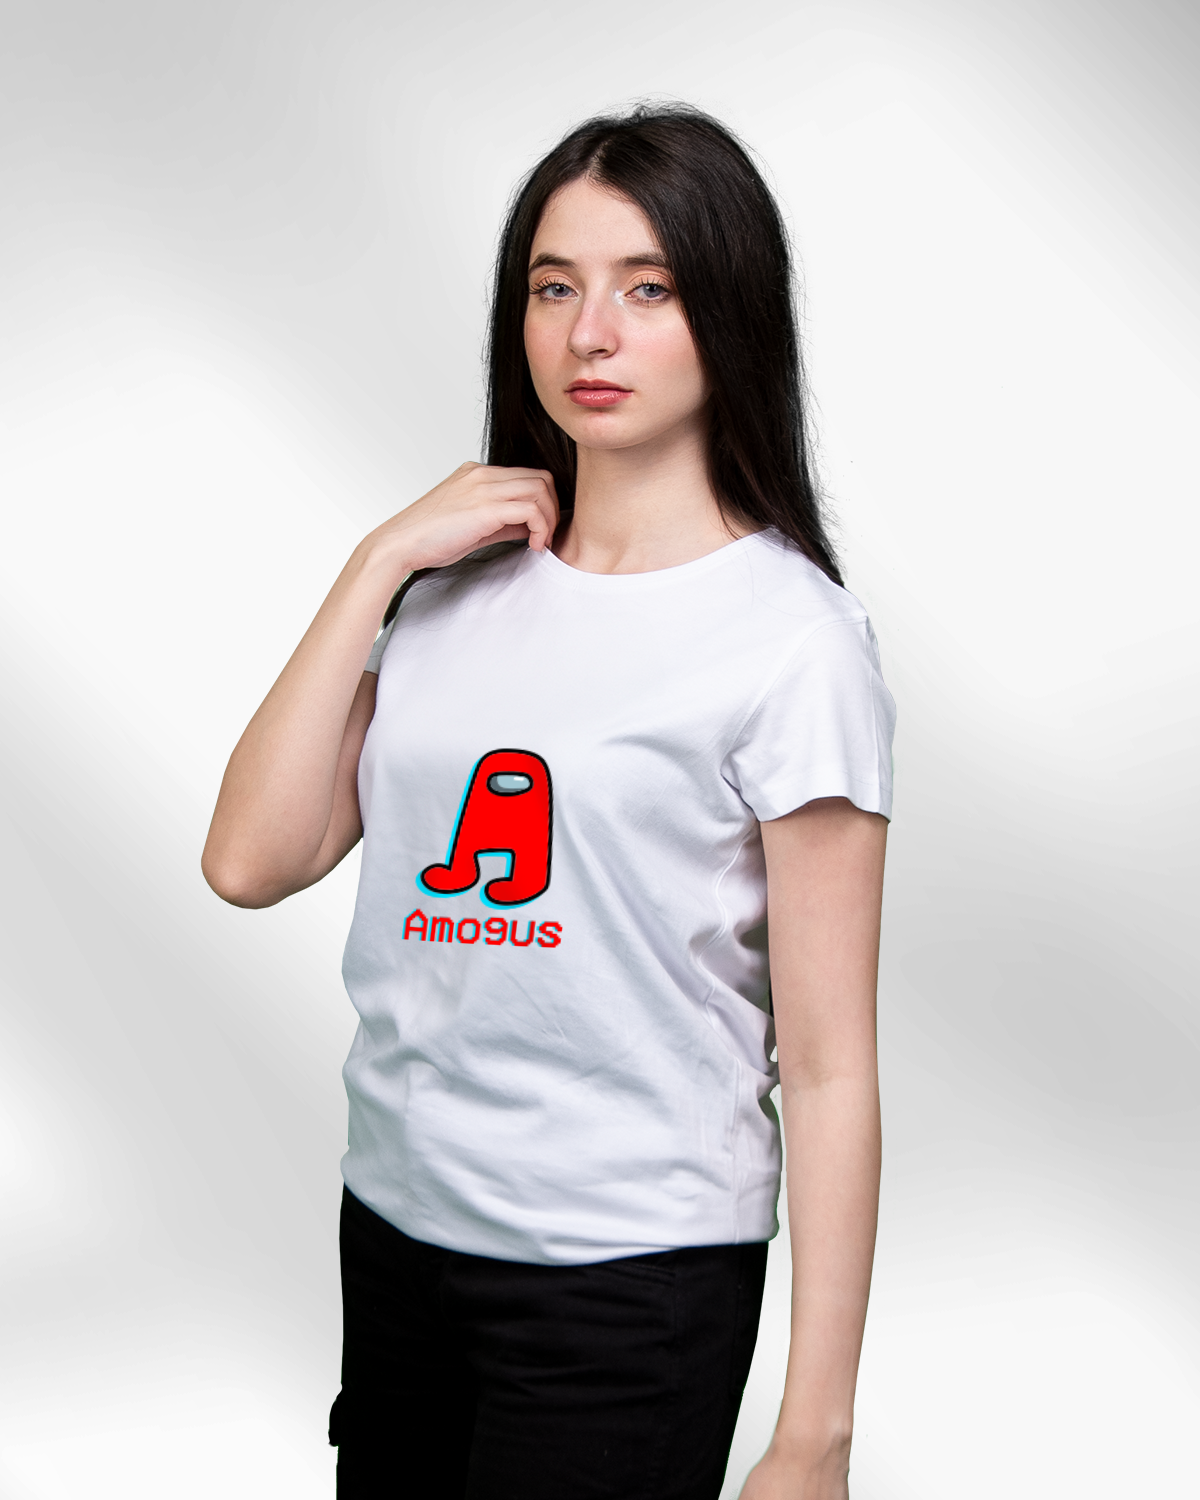 Women's T-Shirt (Amogus)